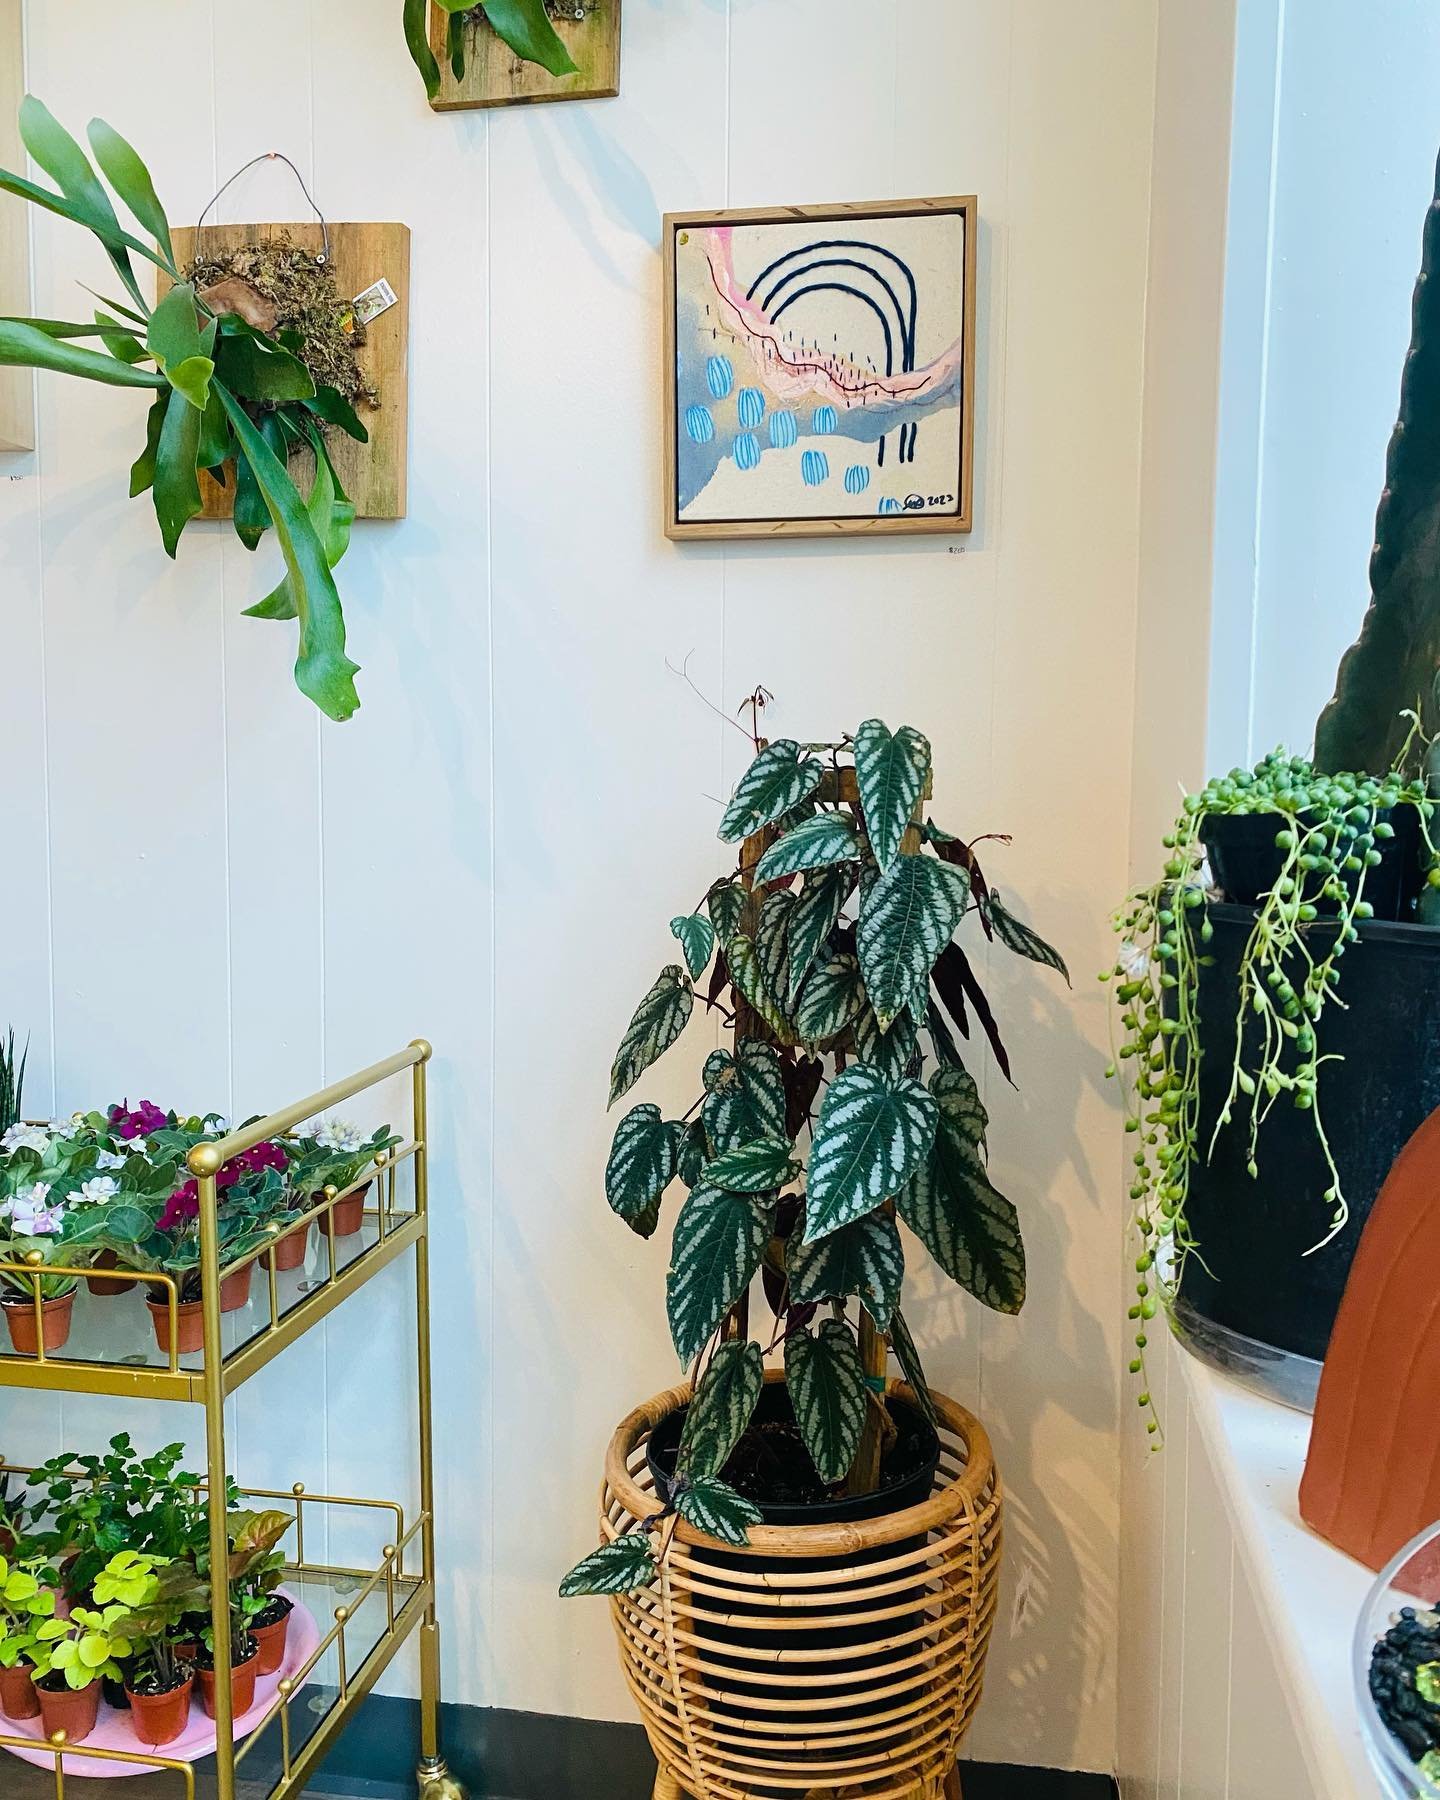 Shop things that make me smile. 

#indigroplants #plantshop #localplants #localplantshop #localart #handmadeplanters #ceramicart #artgallery #plantshopvibes #plantbar #mainstreettakoma #washingtondc #mountedorchids #orchids #orchidart